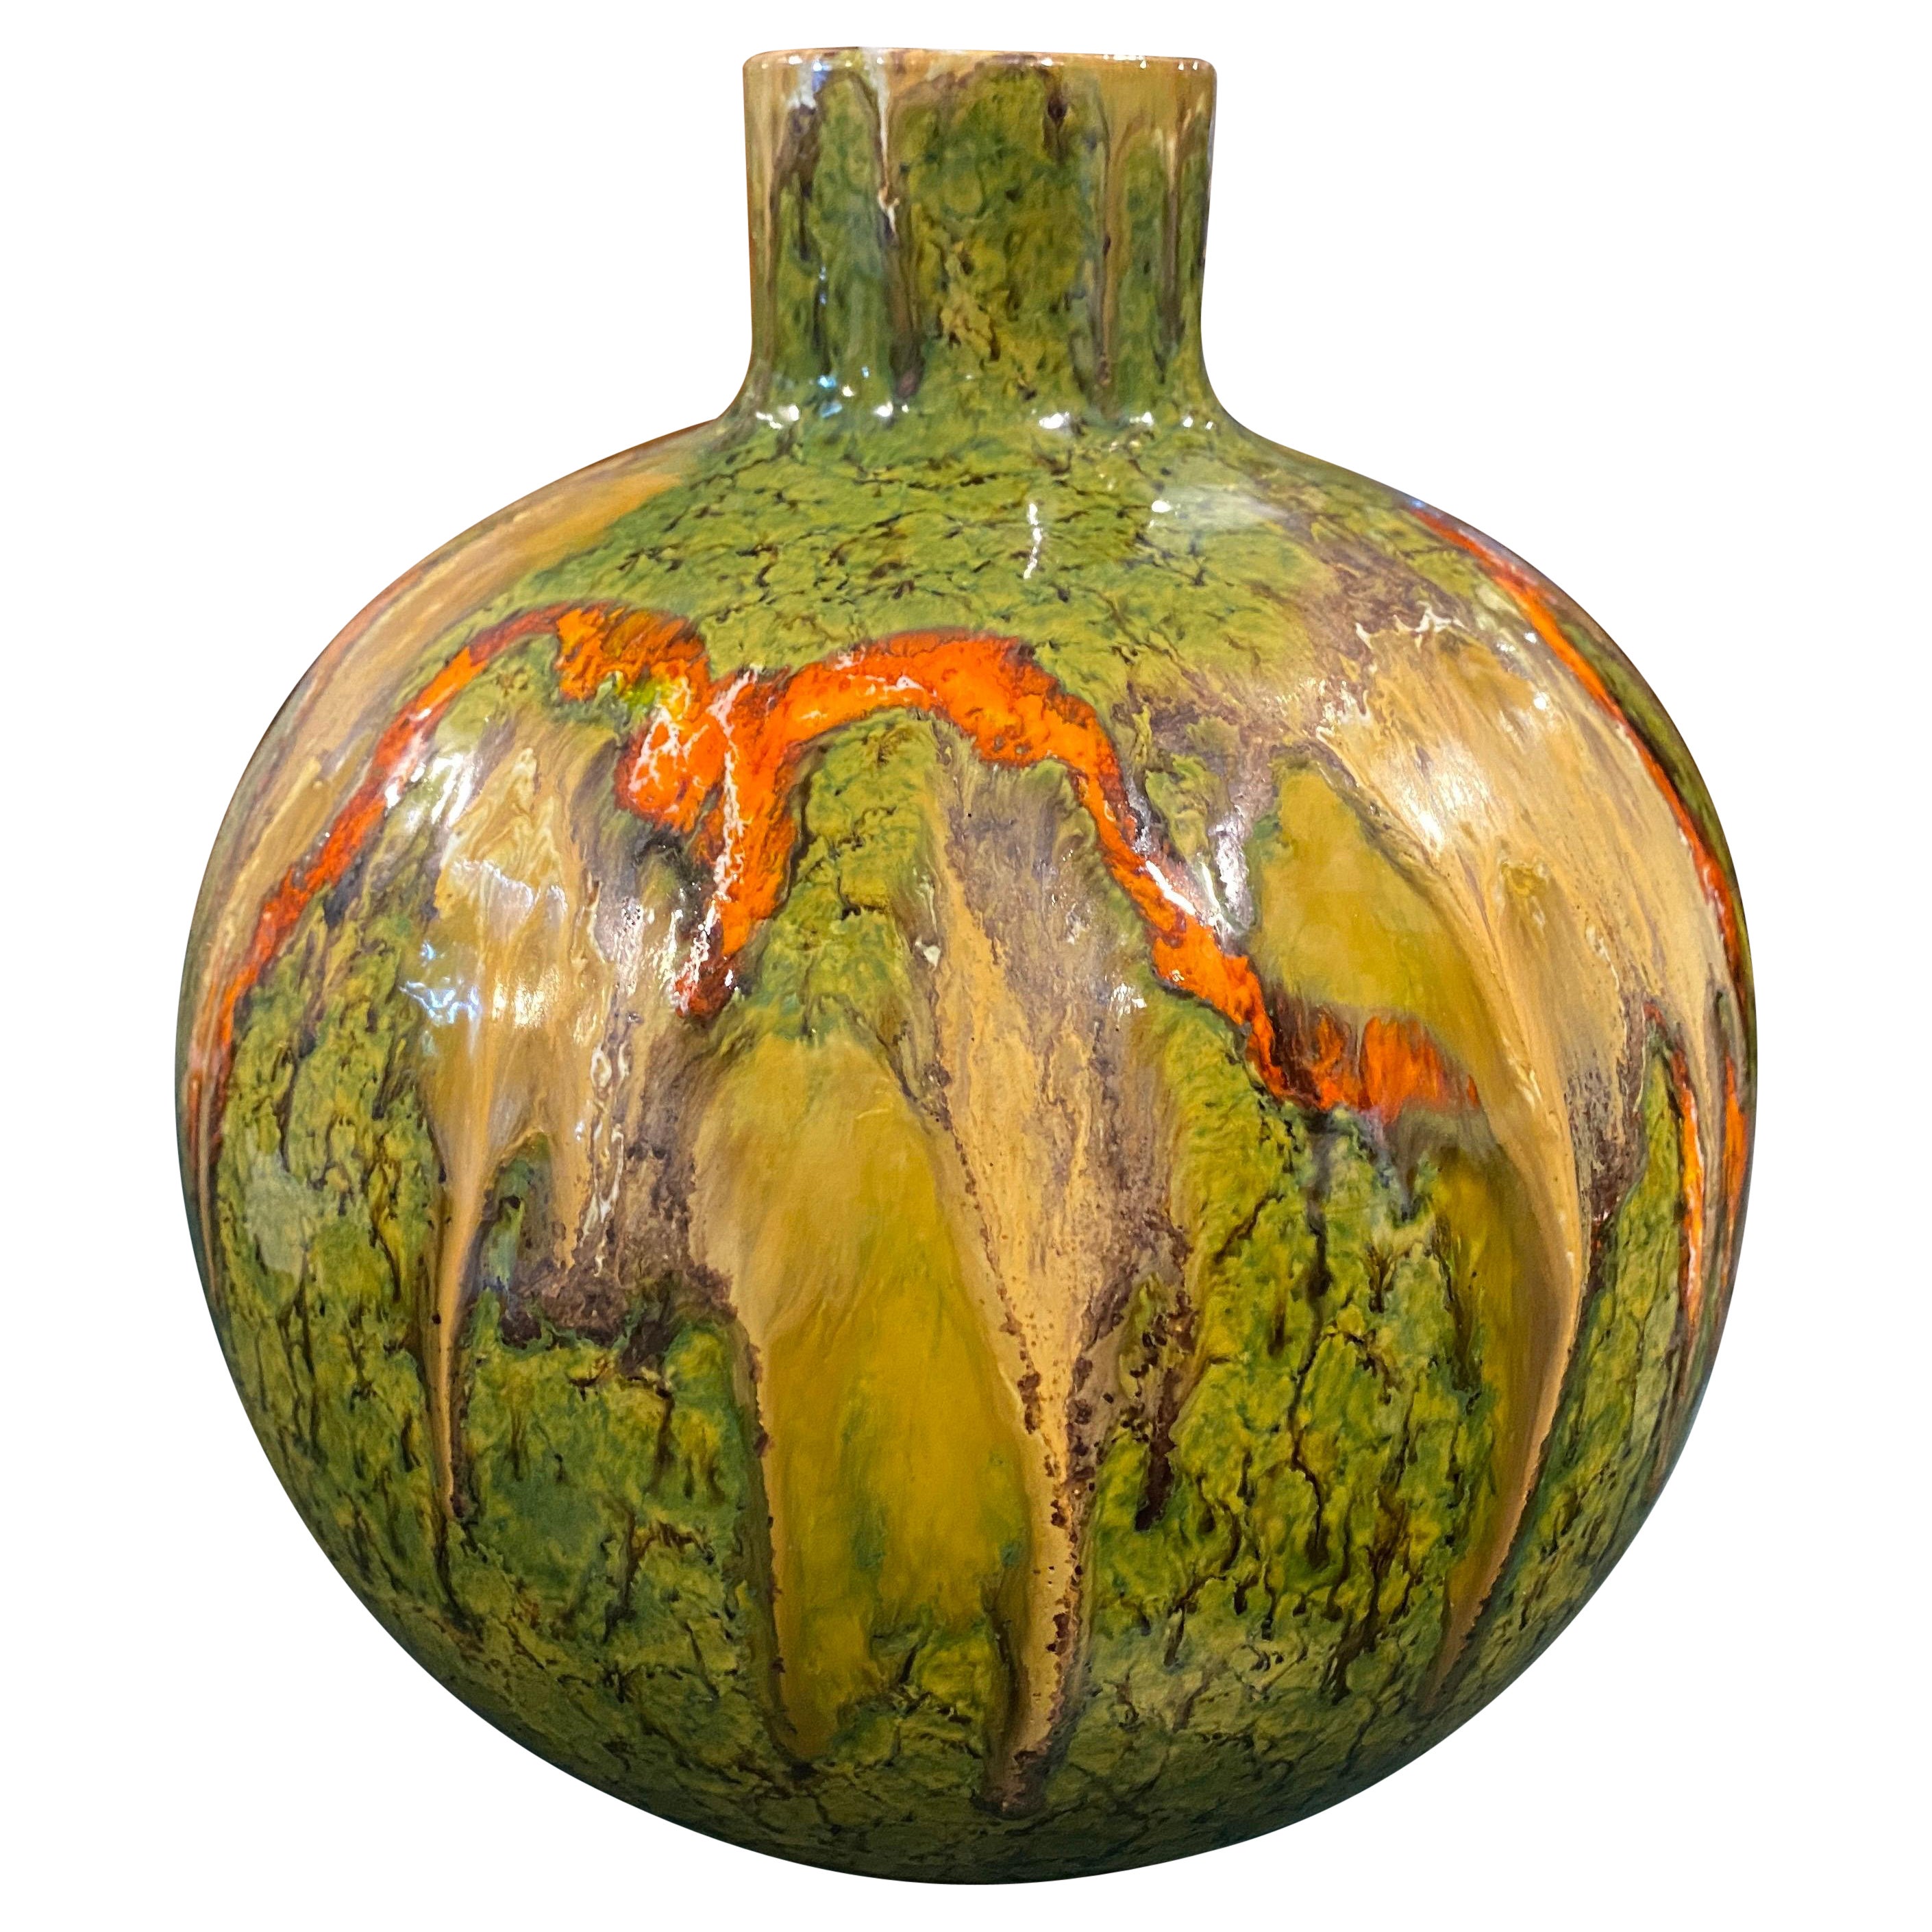 1970s Modernist Hand-Painted Ceramic Italian Vase by Bertoncello